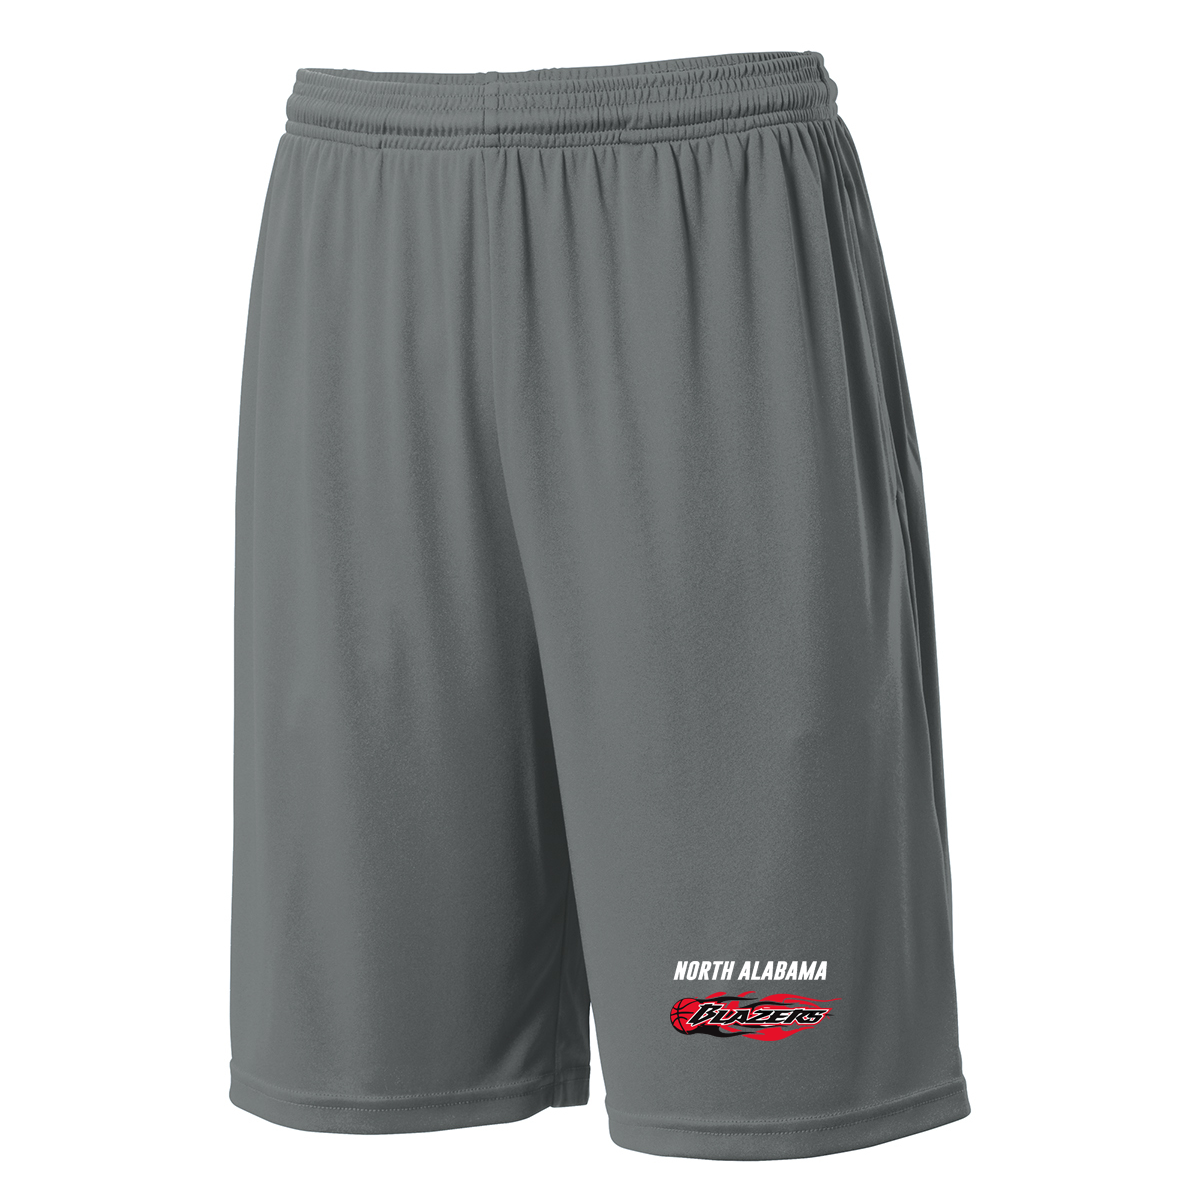 Blazers Basketball Shorts